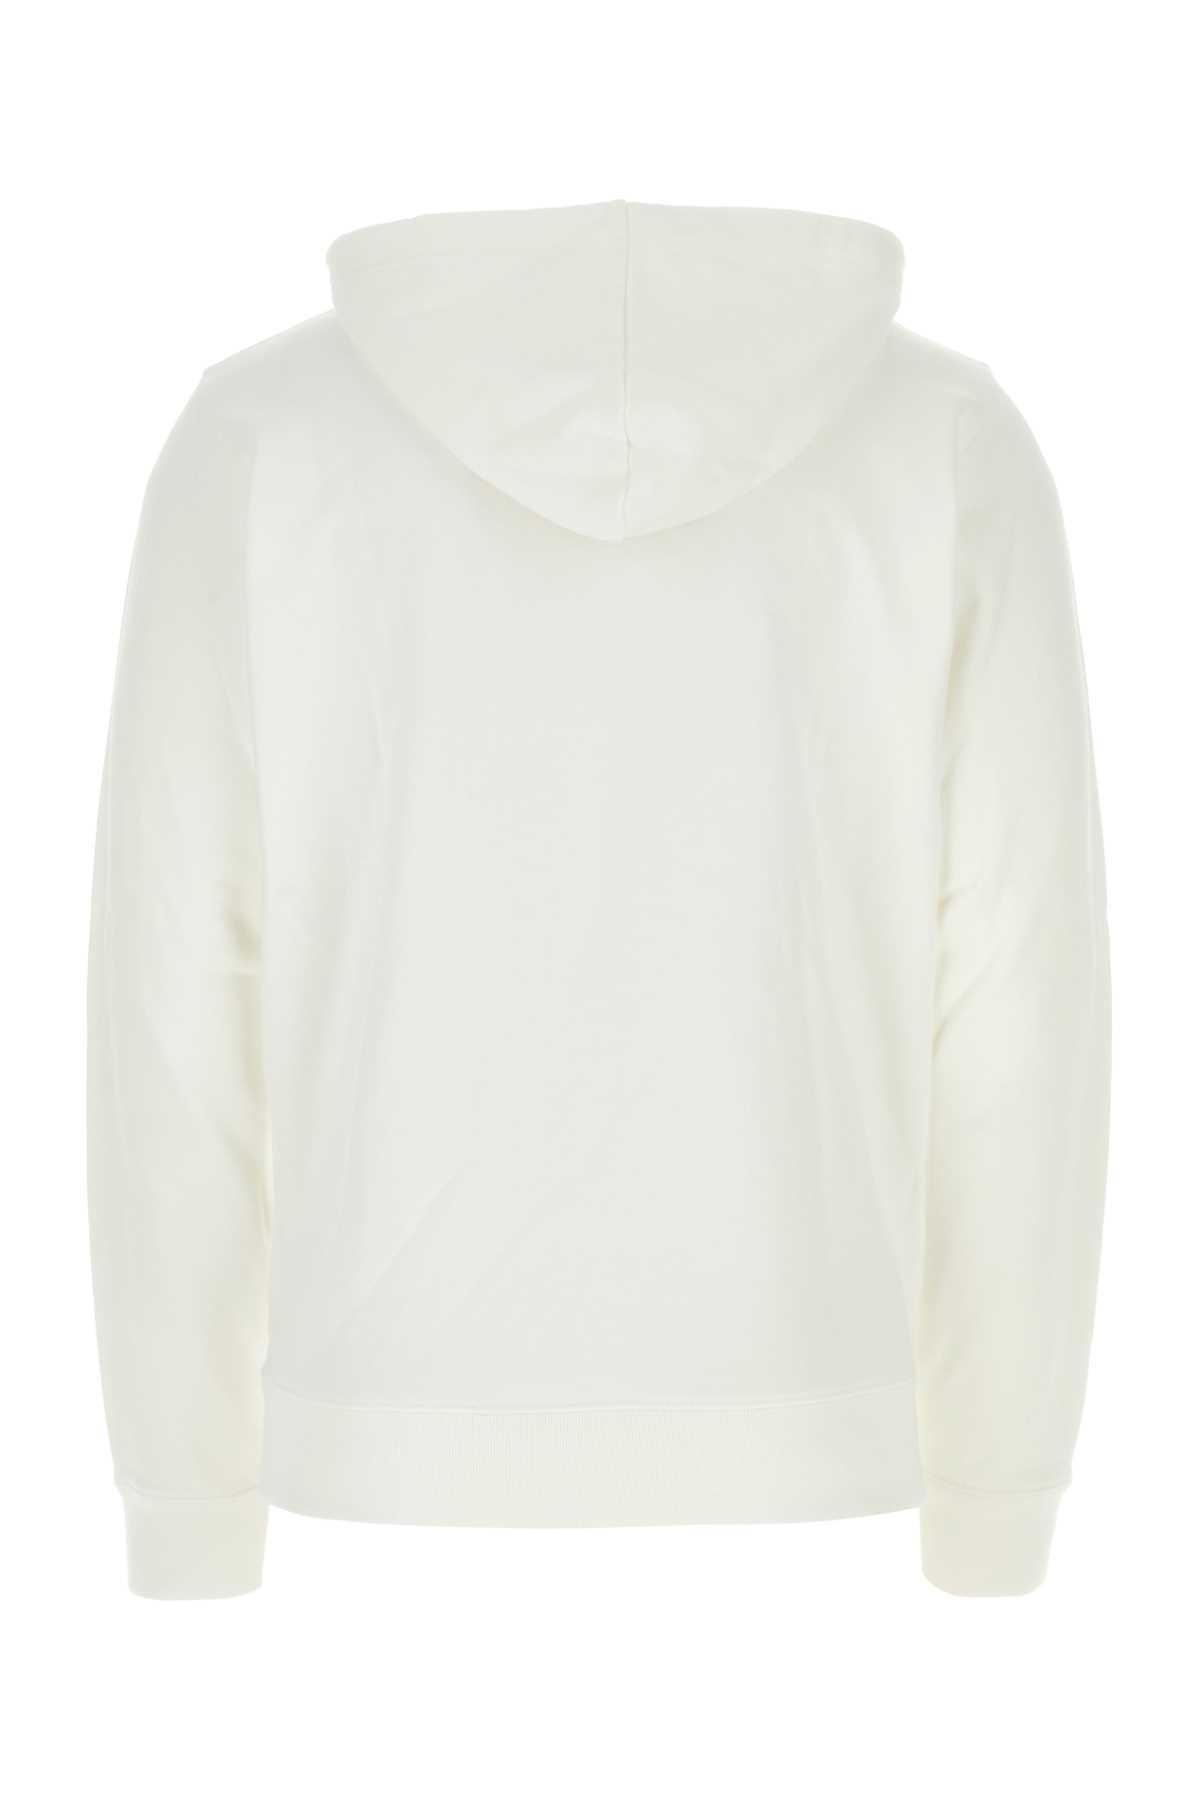 Courrèges Cotton White Sweatshirt In Heritagewhite